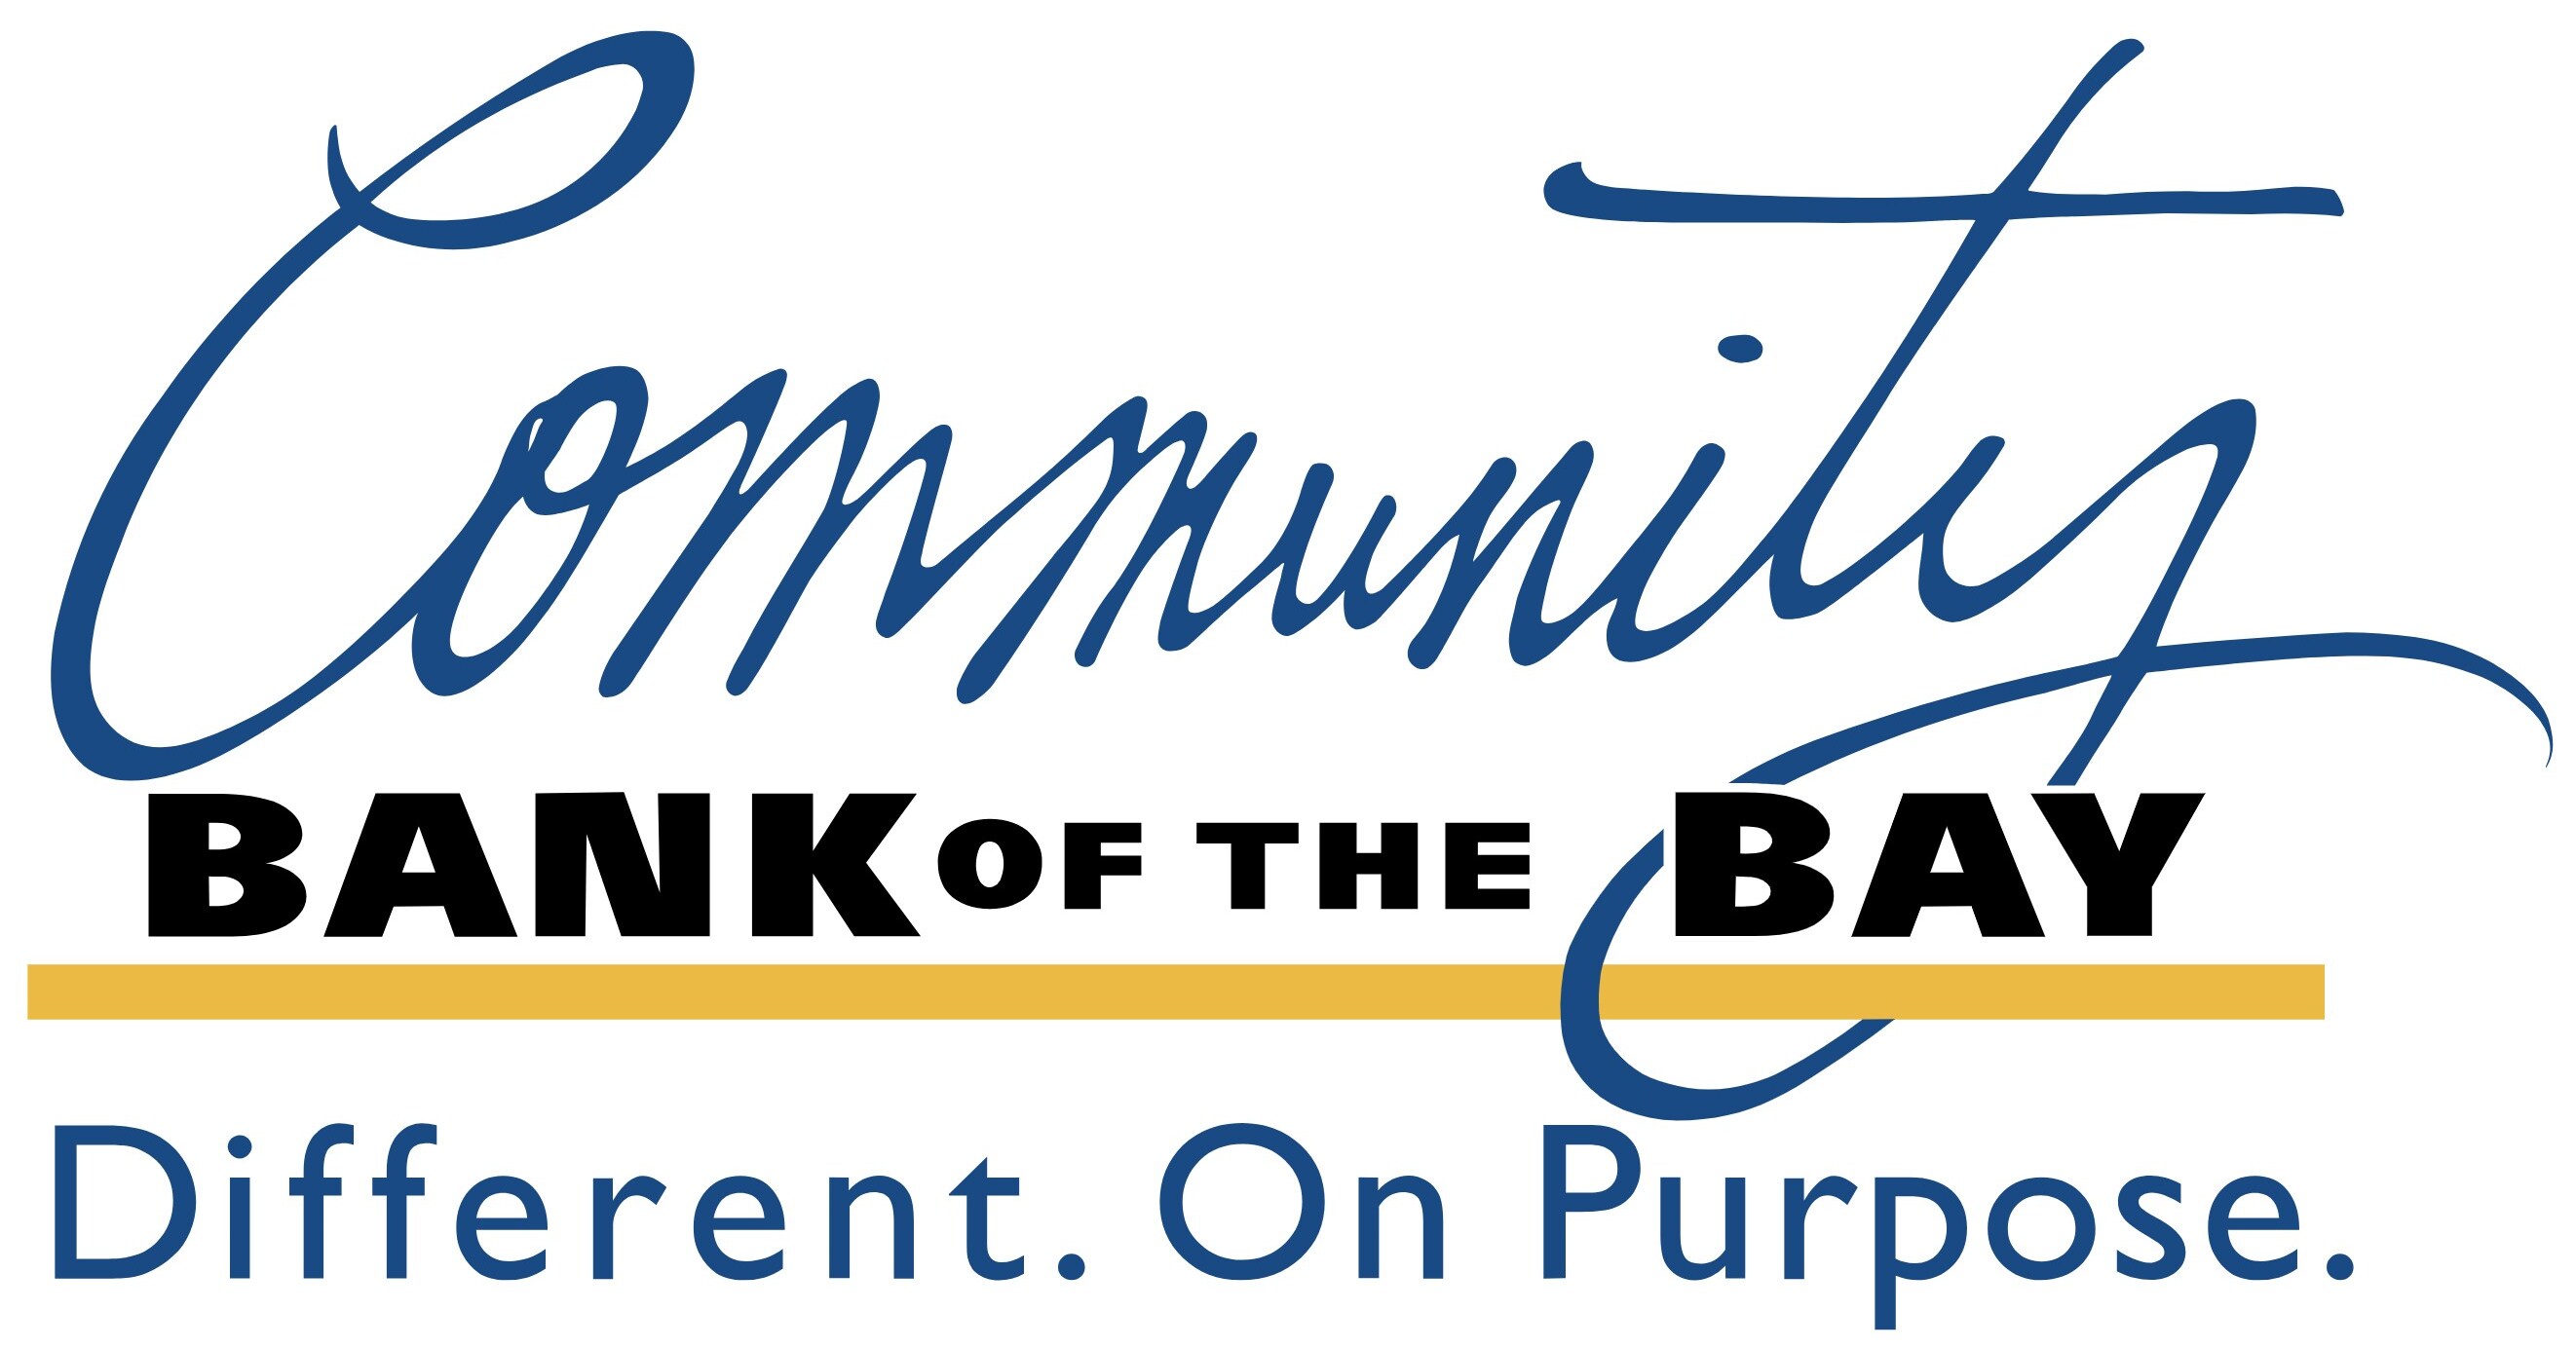 COMMUNITY BANK OF THE BAY (CBB)